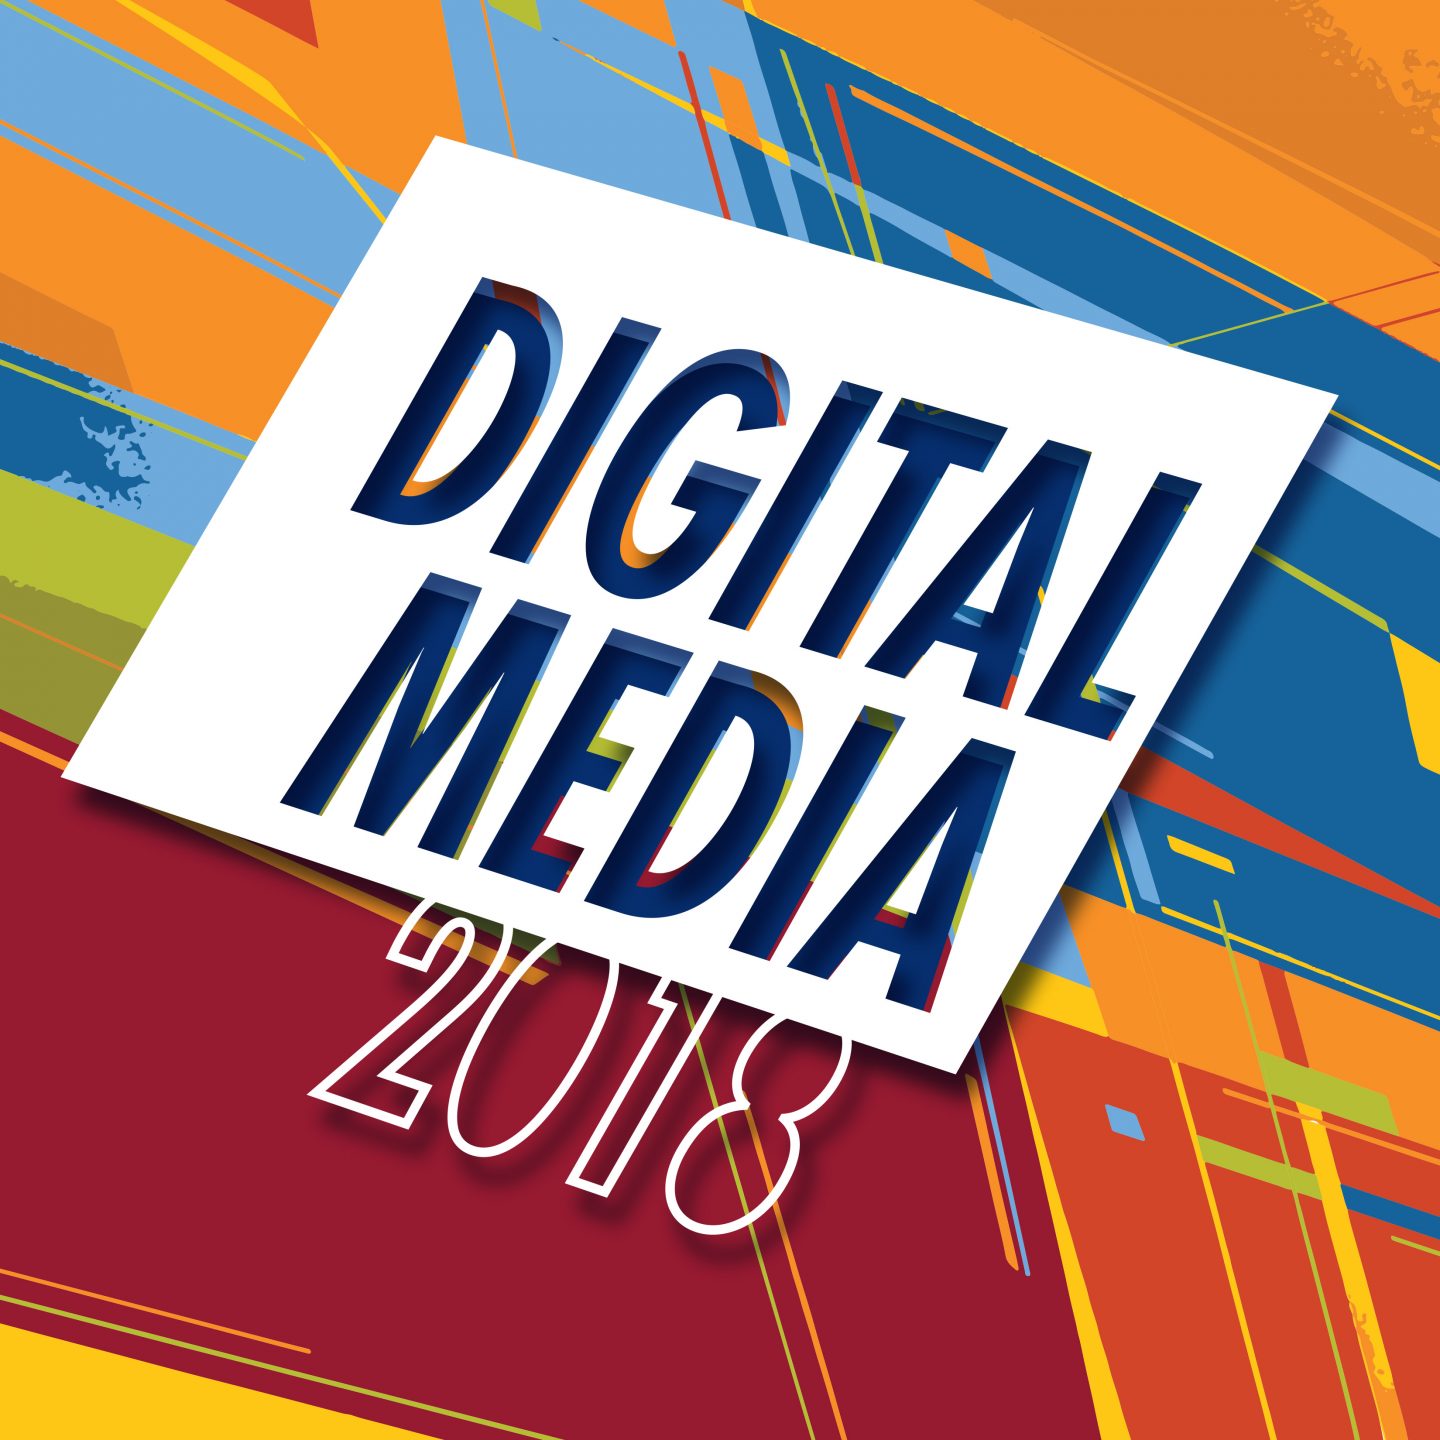 Digital Media Showcase 2018